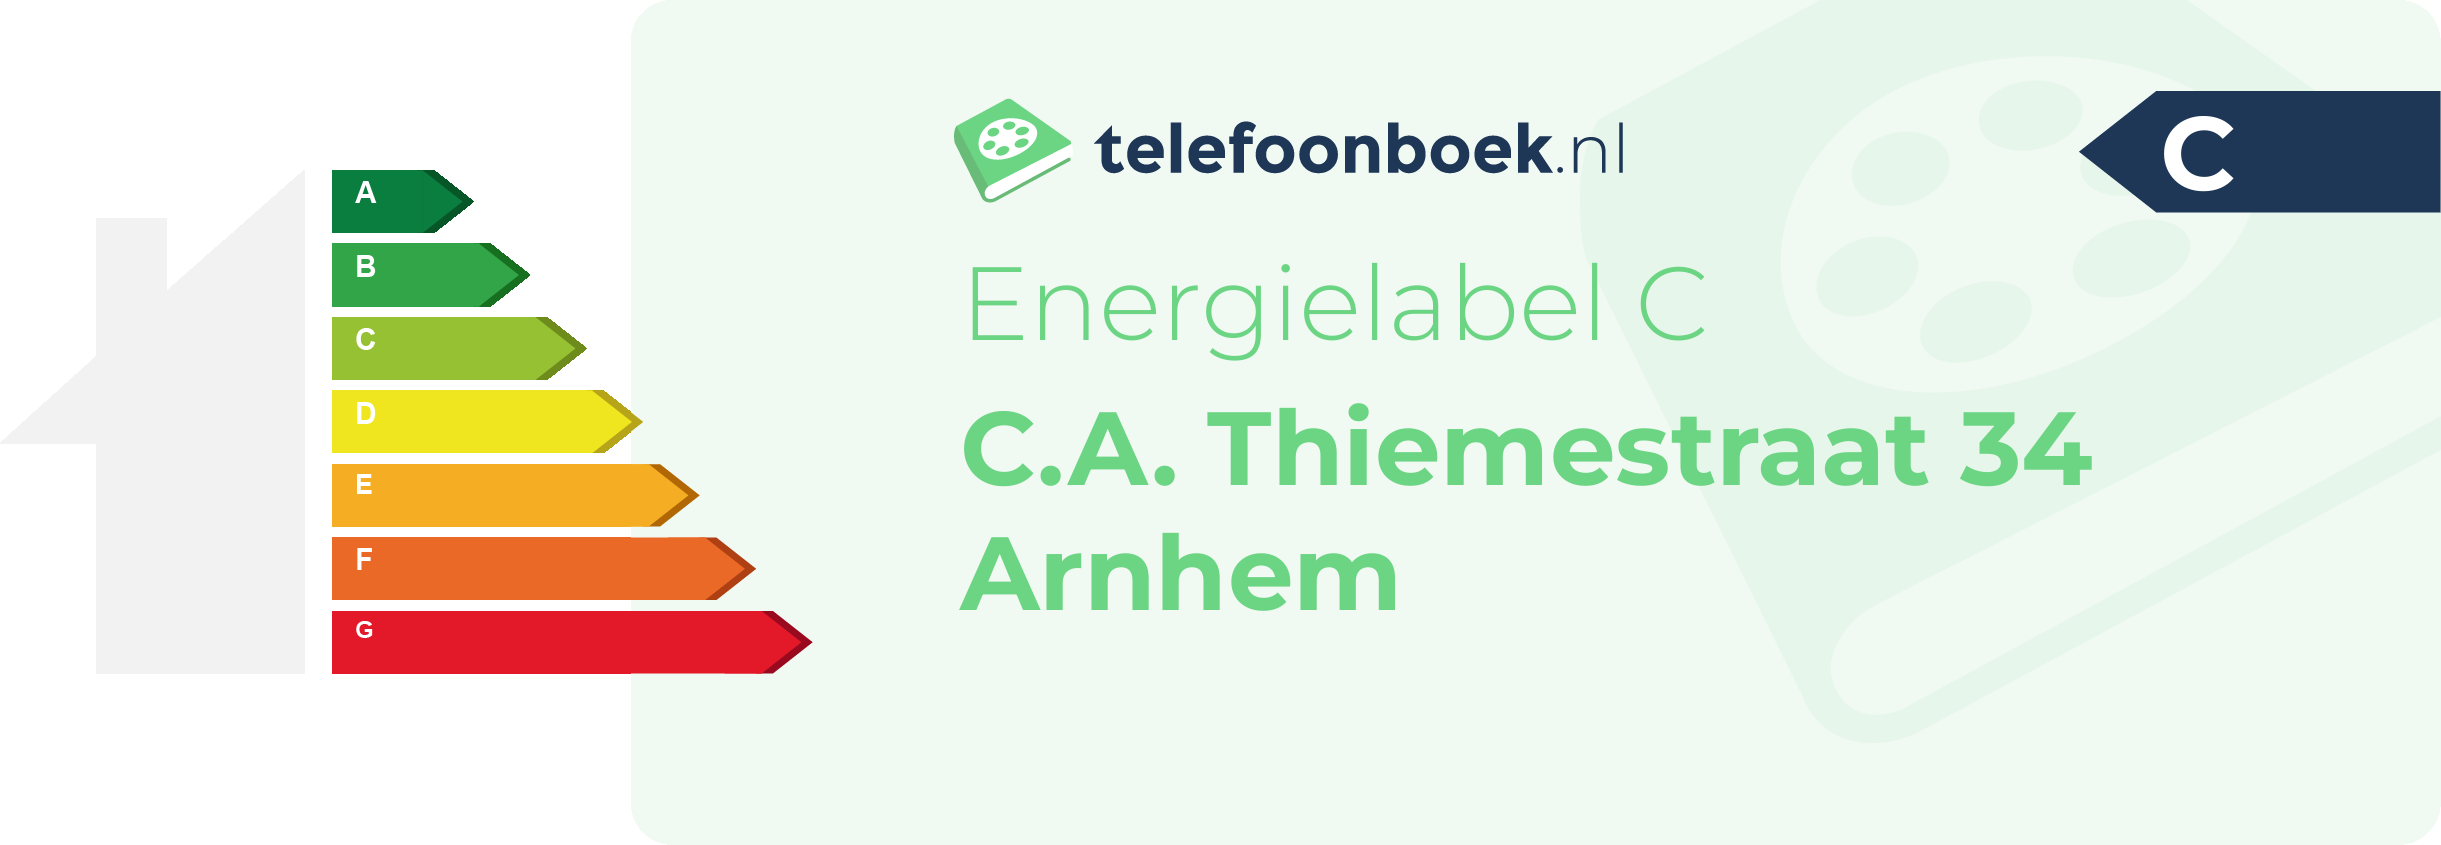 Energielabel C.A. Thiemestraat 34 Arnhem